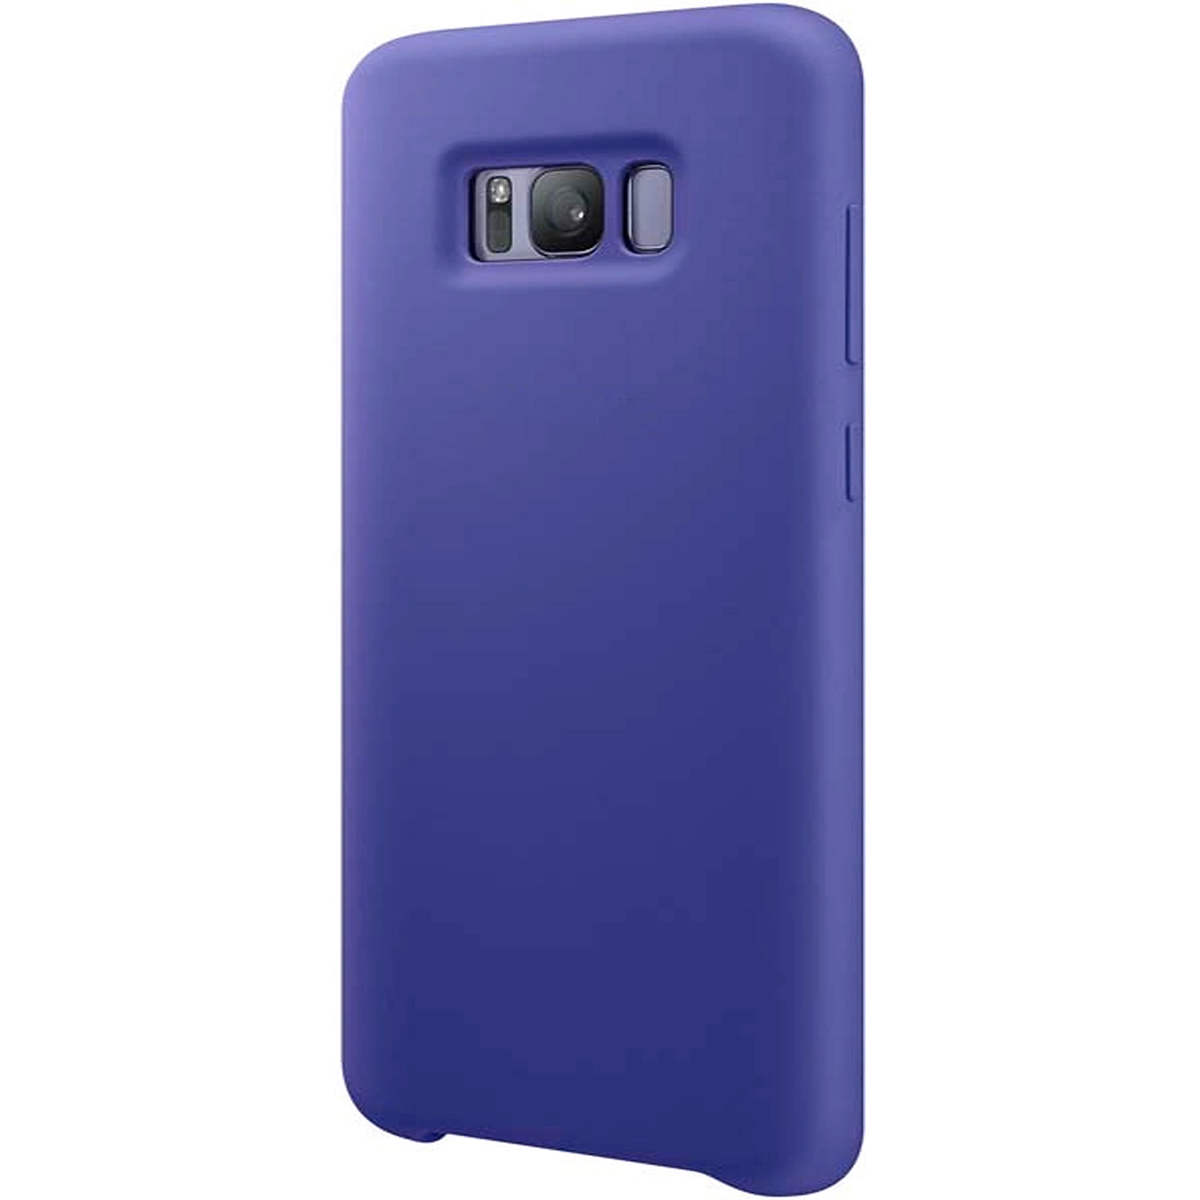 Чехол накладка Silicon Cover для SAMSUNG Galaxy S8 Plus (SM-G955), силикон, бархат, цвет синий